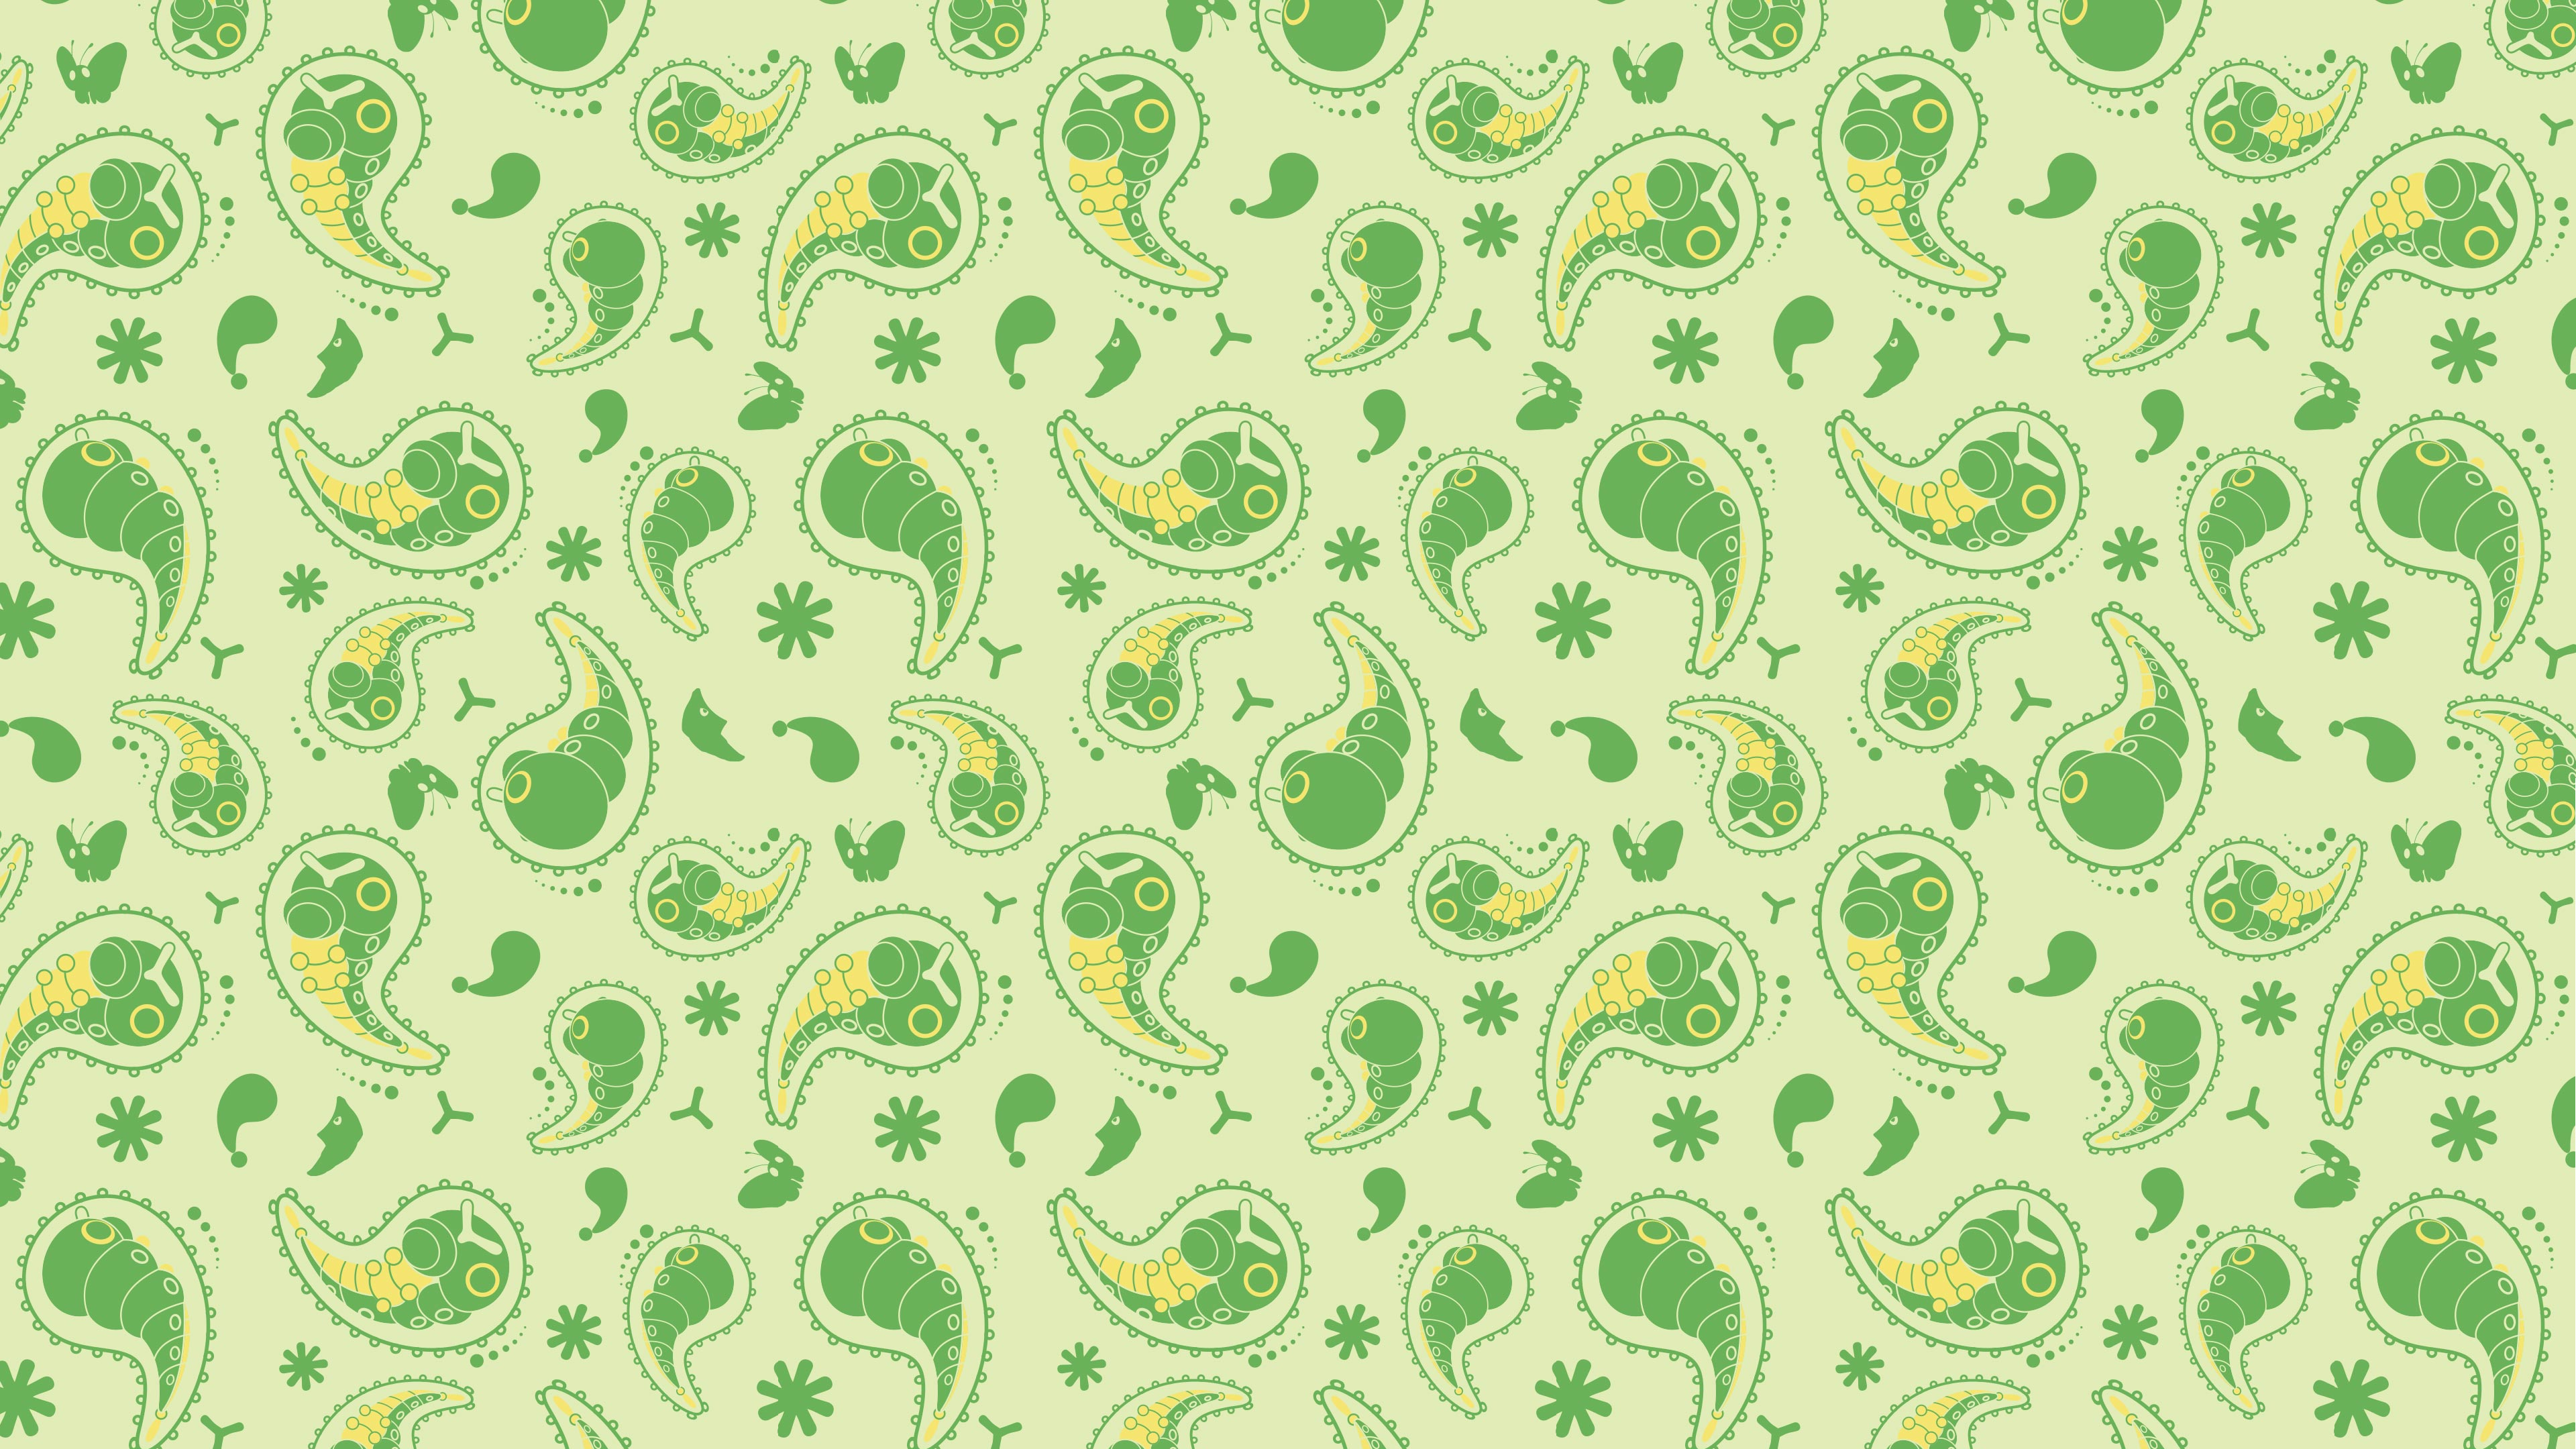 General 3840x2160 Pokémon pattern green background simple background